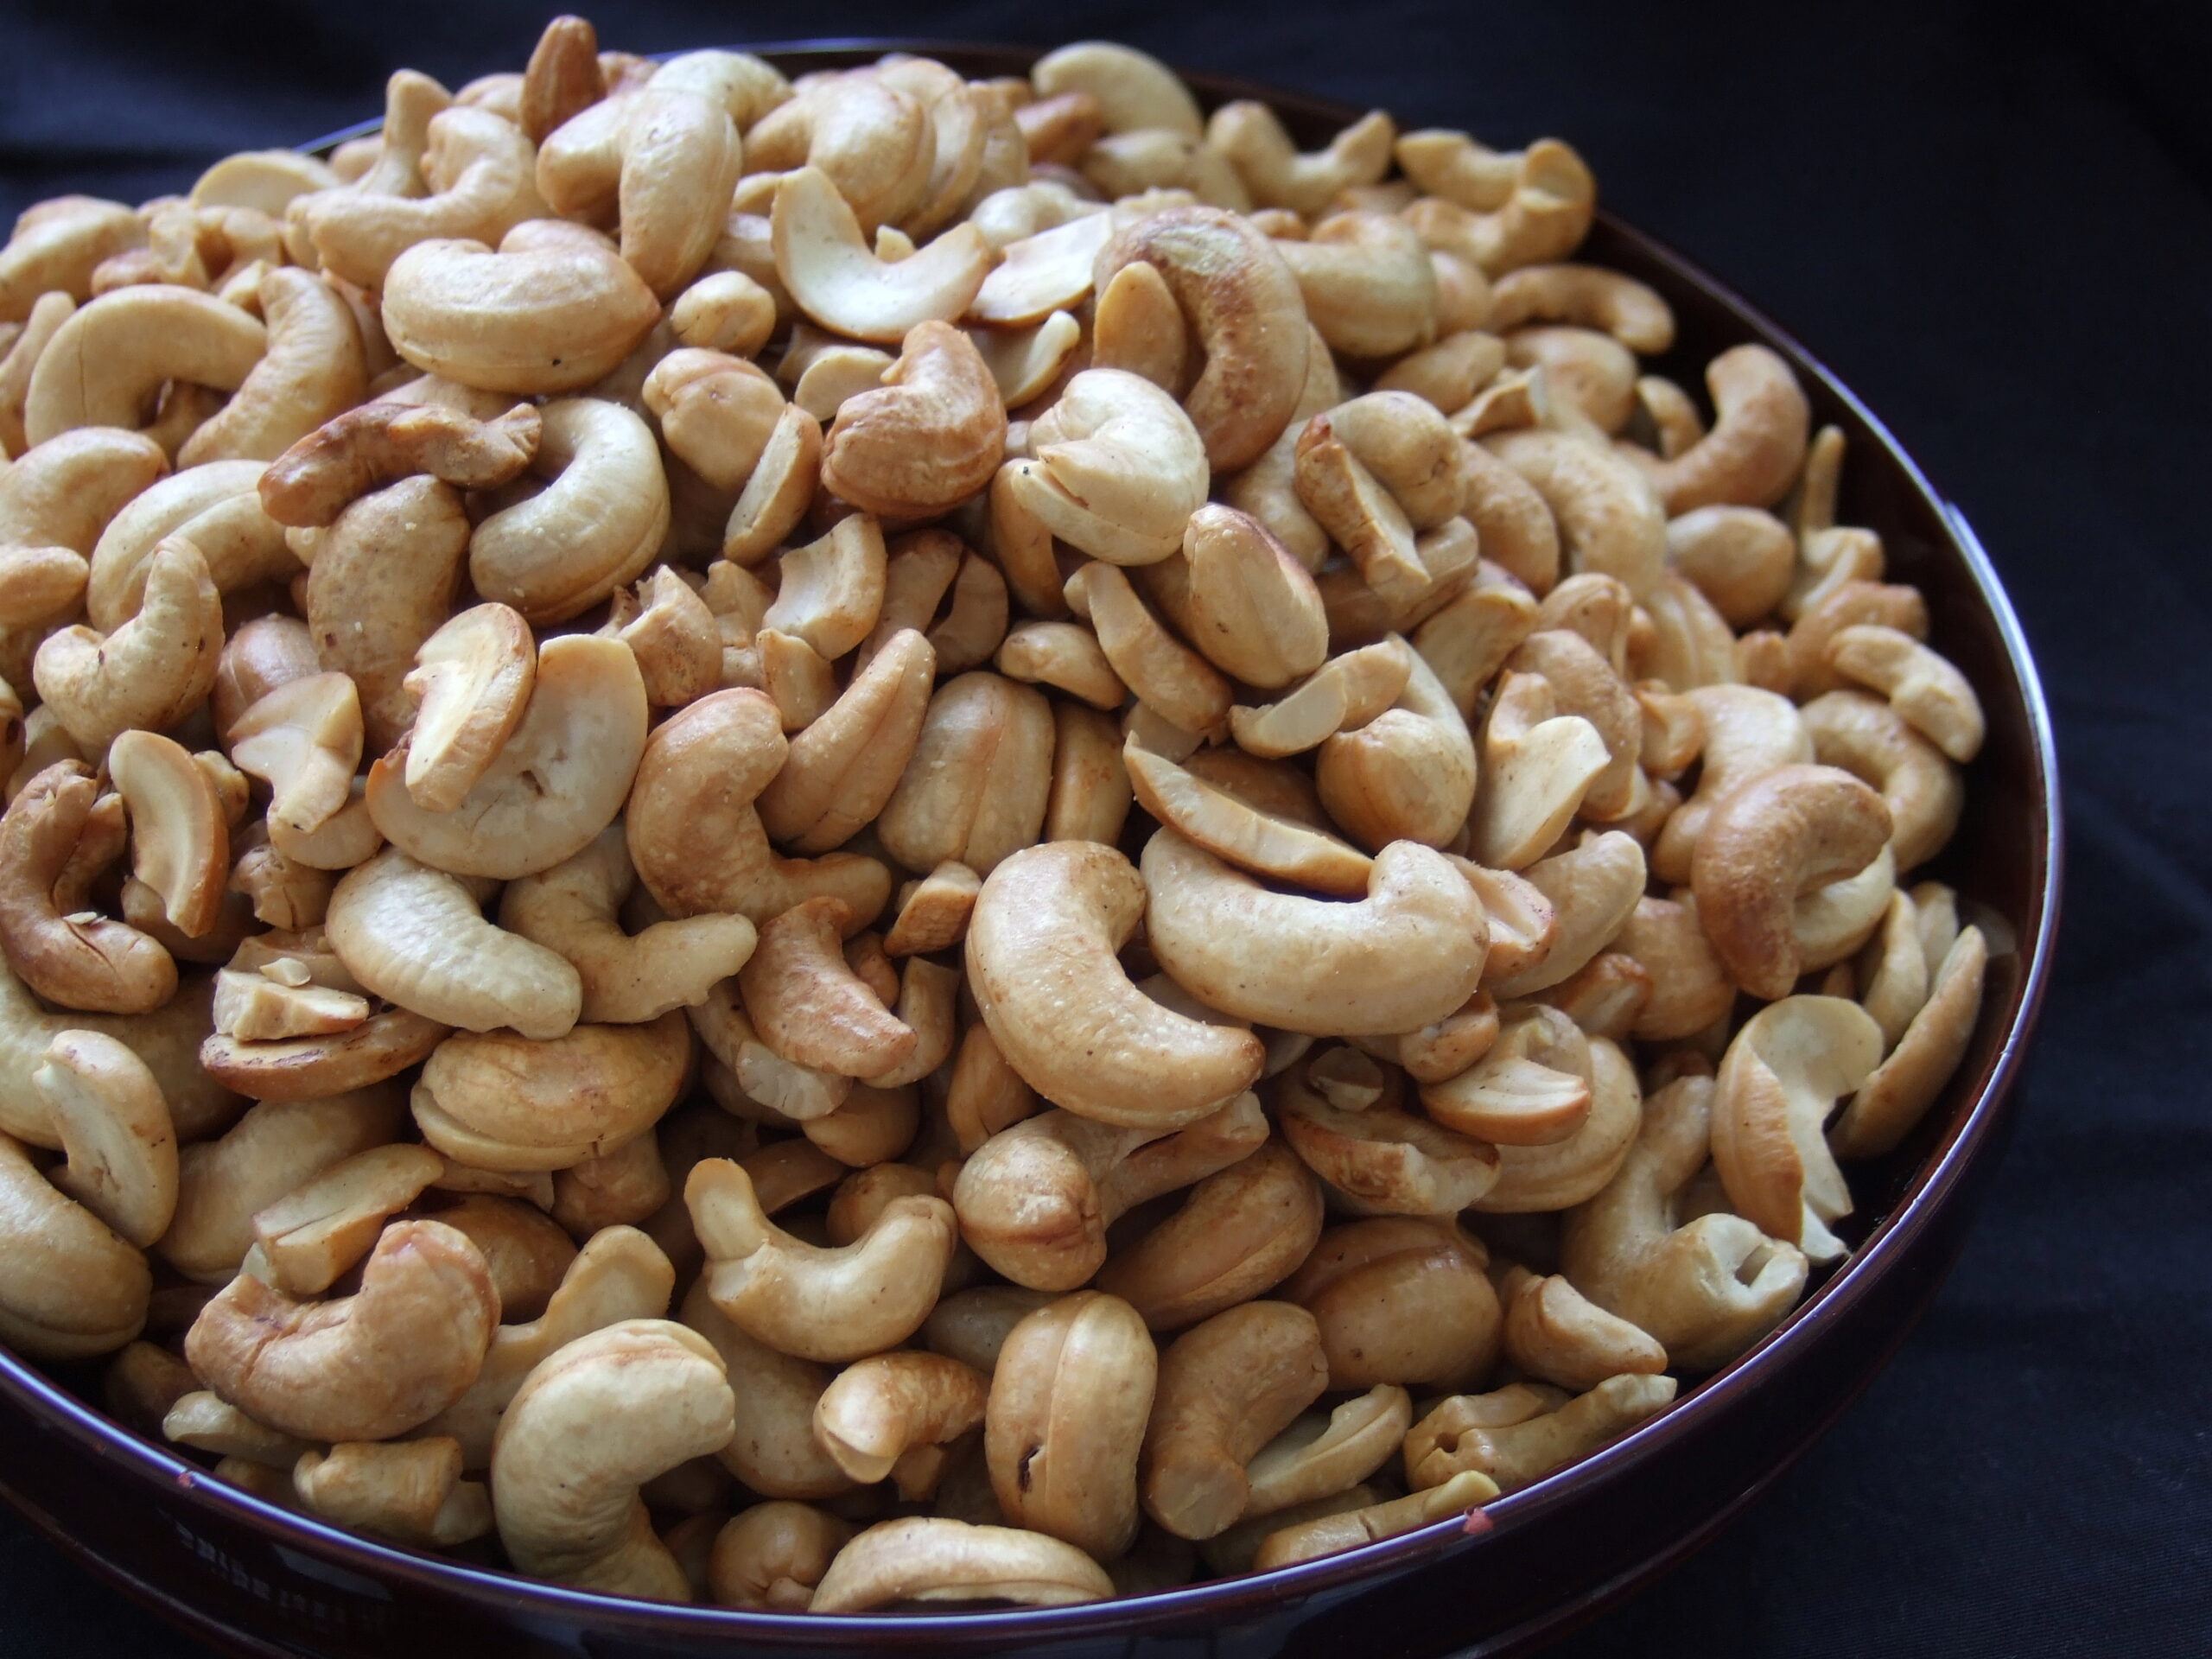 Cashew_nuts